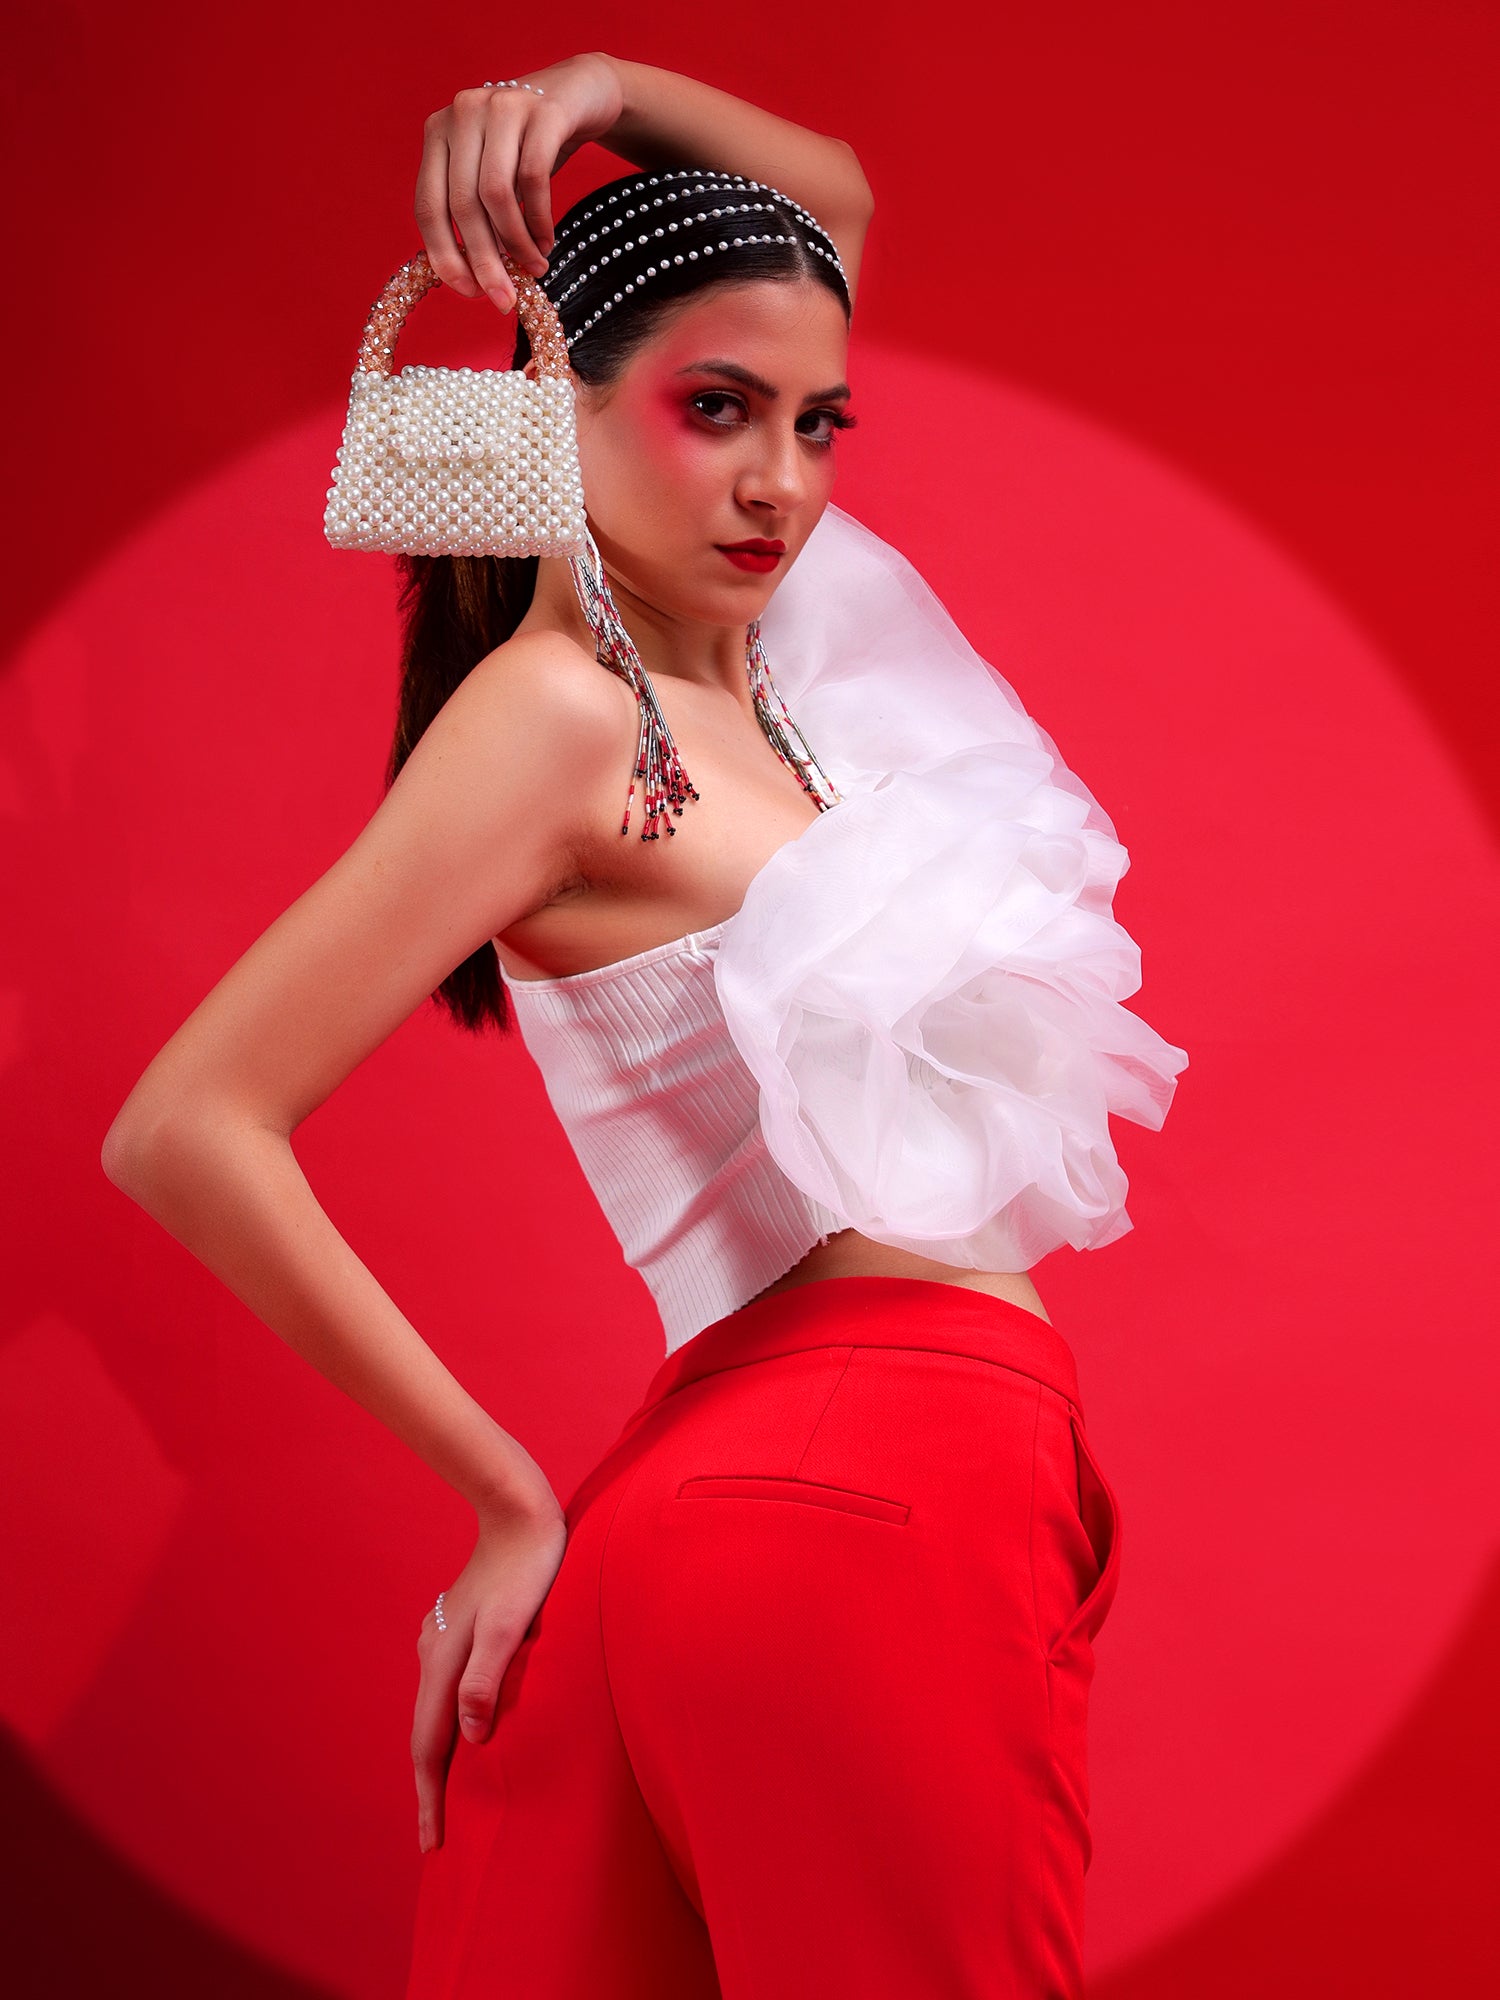 DesignerType4 Red Ladies Skull Clutch Knuckle Rings Four Fingers Handbag  Evening Purse Wedding Bag 03918b4855630 From Fi8x, $36.12 | DHgate.Com